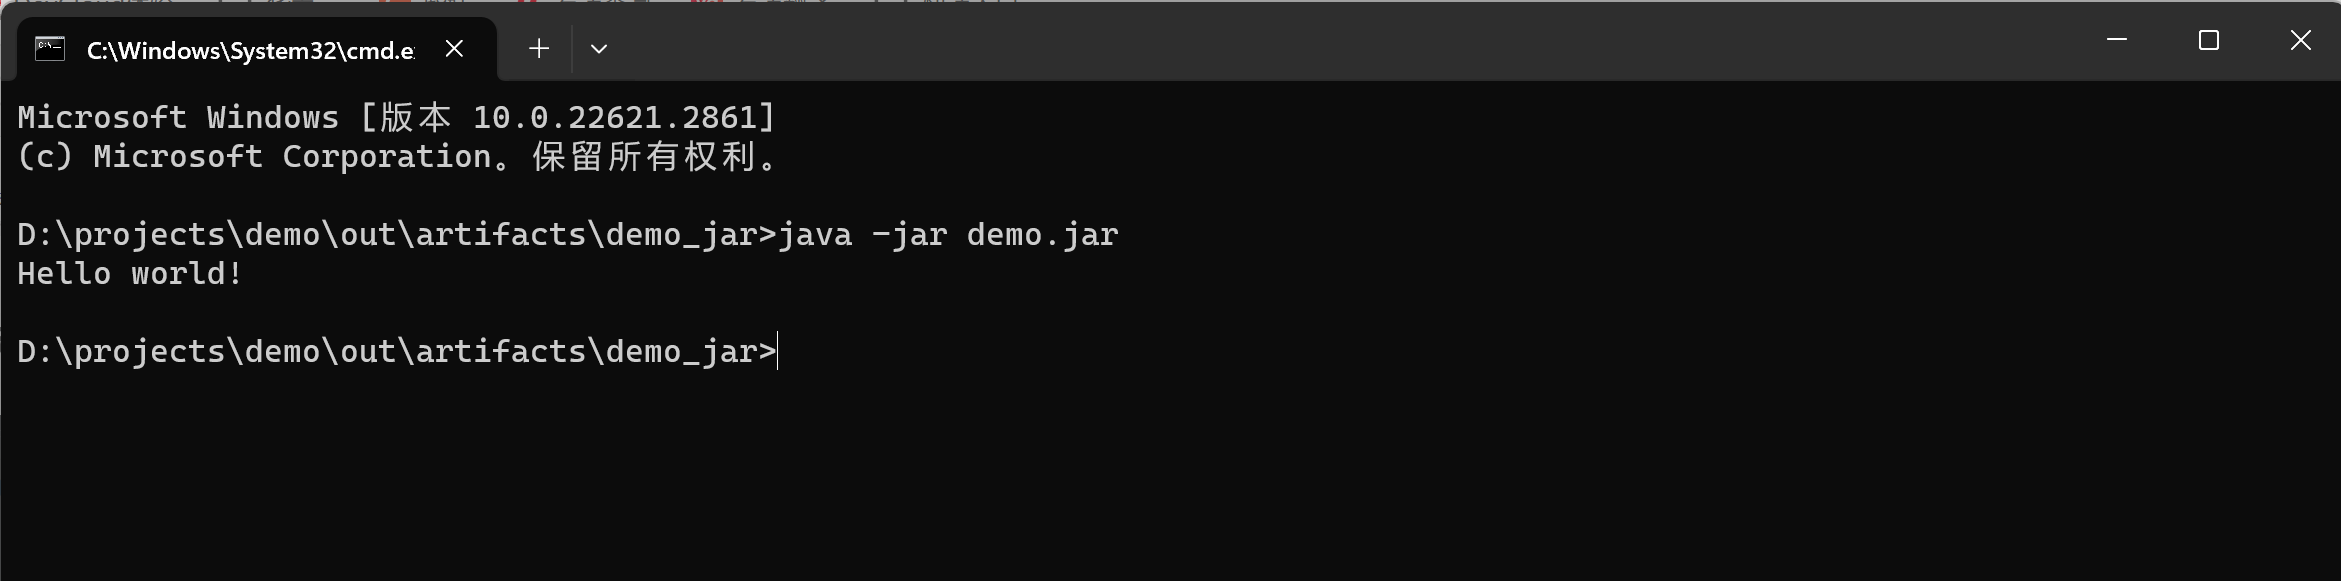 java 创建一个可执行的jar包小程序